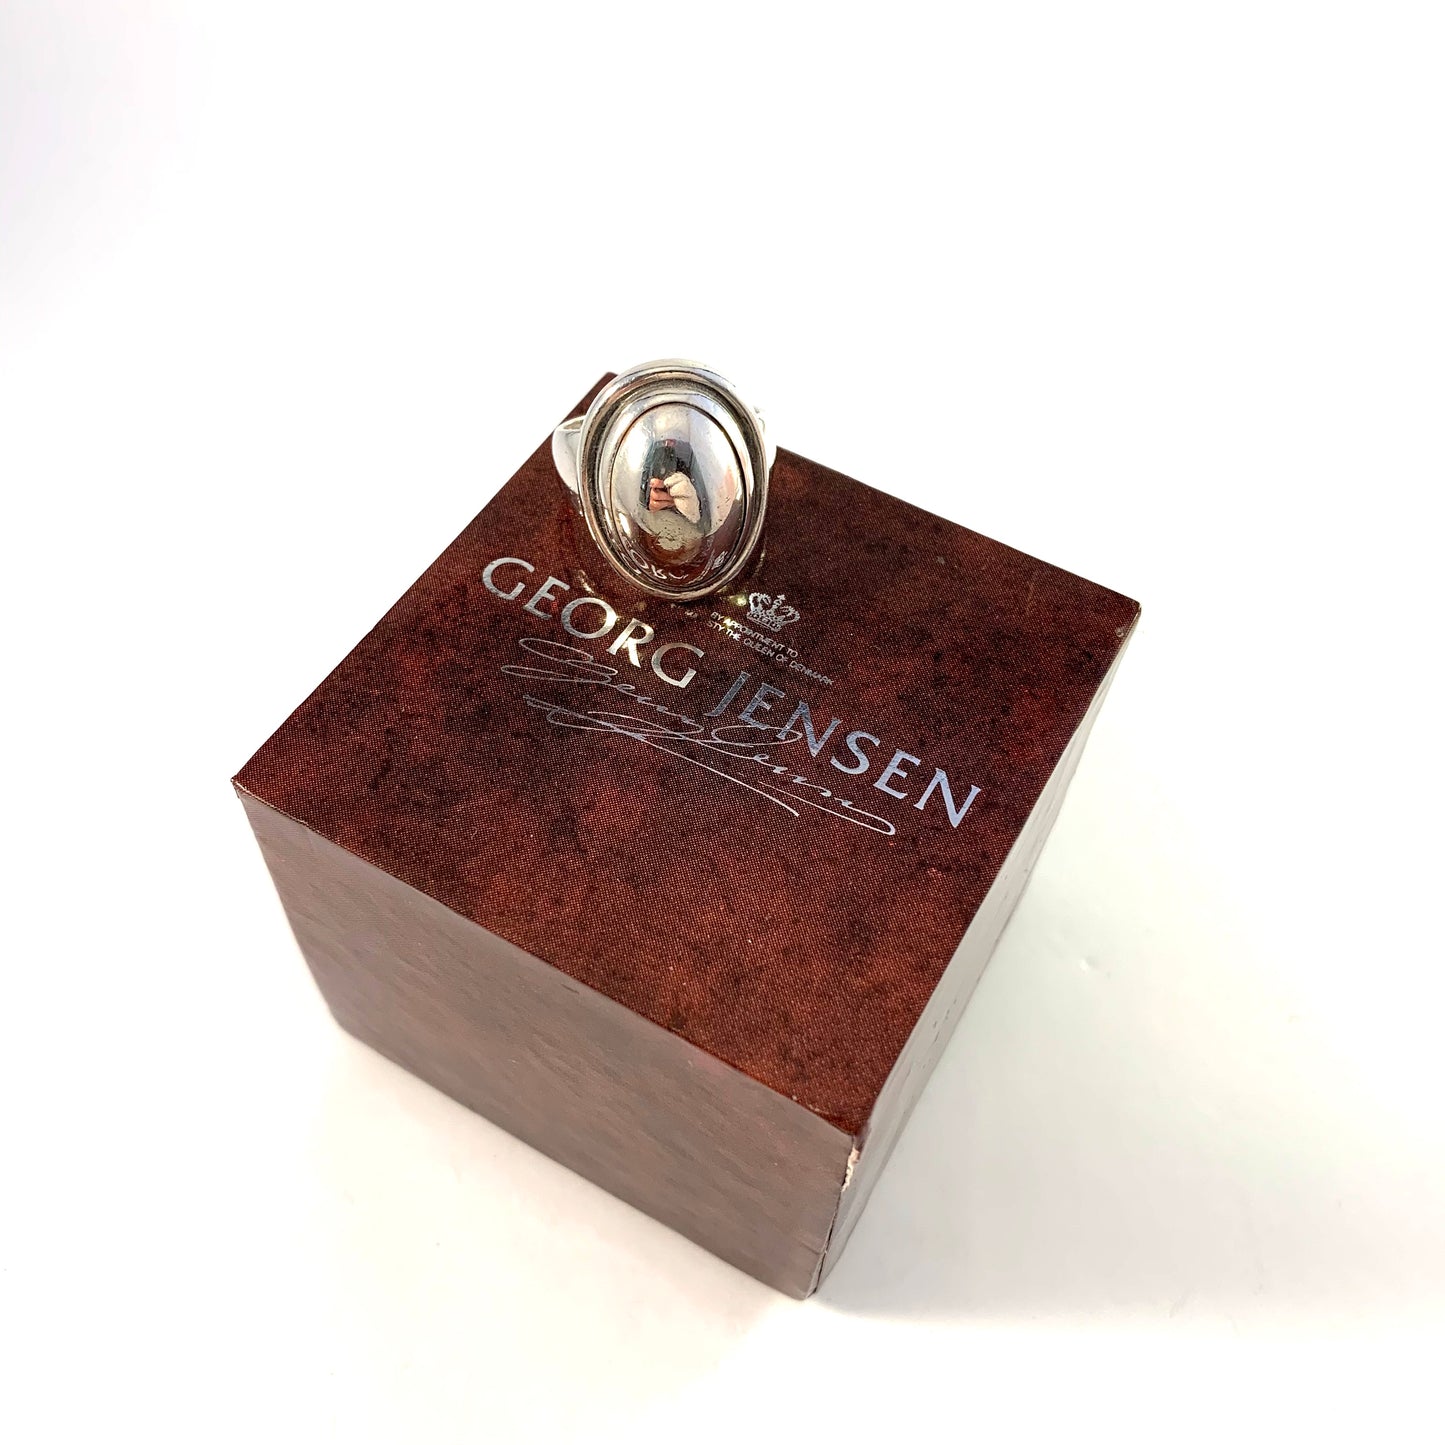 Georg Jensen, design 46a Harald Nielsen, Denmark. Mid Century Sterling Silver Ring. Boxed.